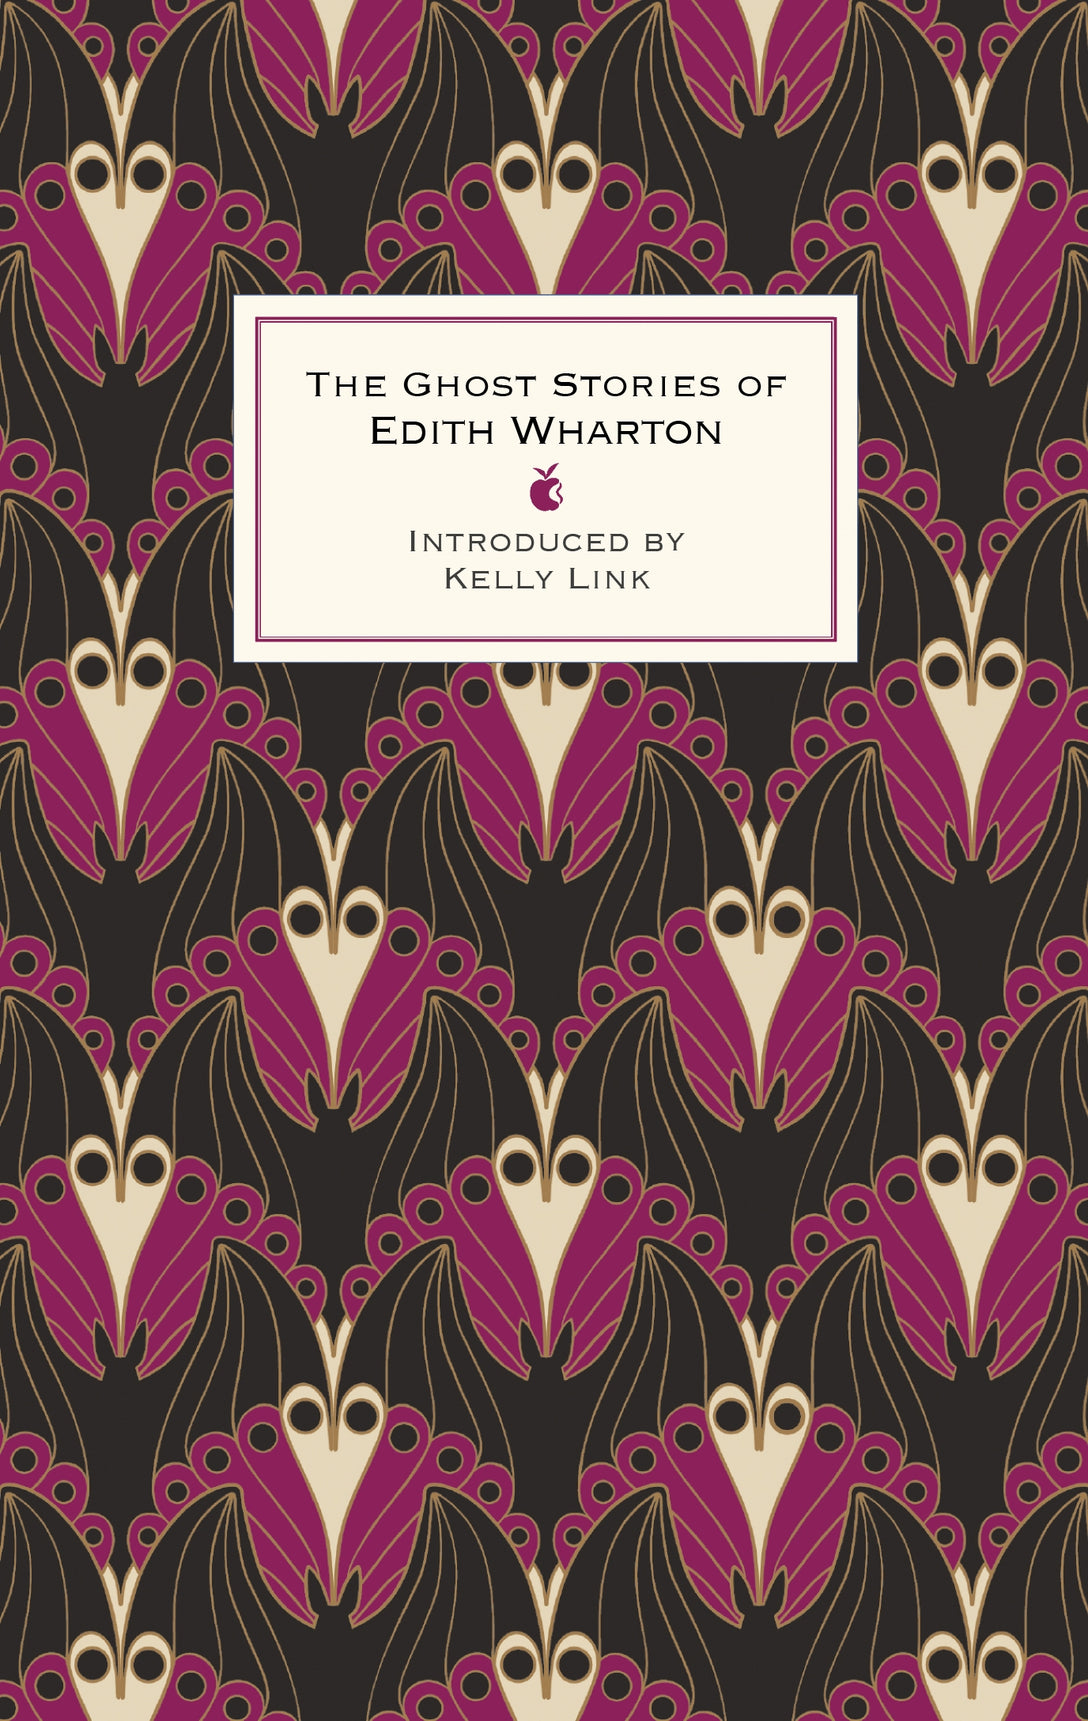 The Ghost Stories Of Edith Wharton by Edith Wharton